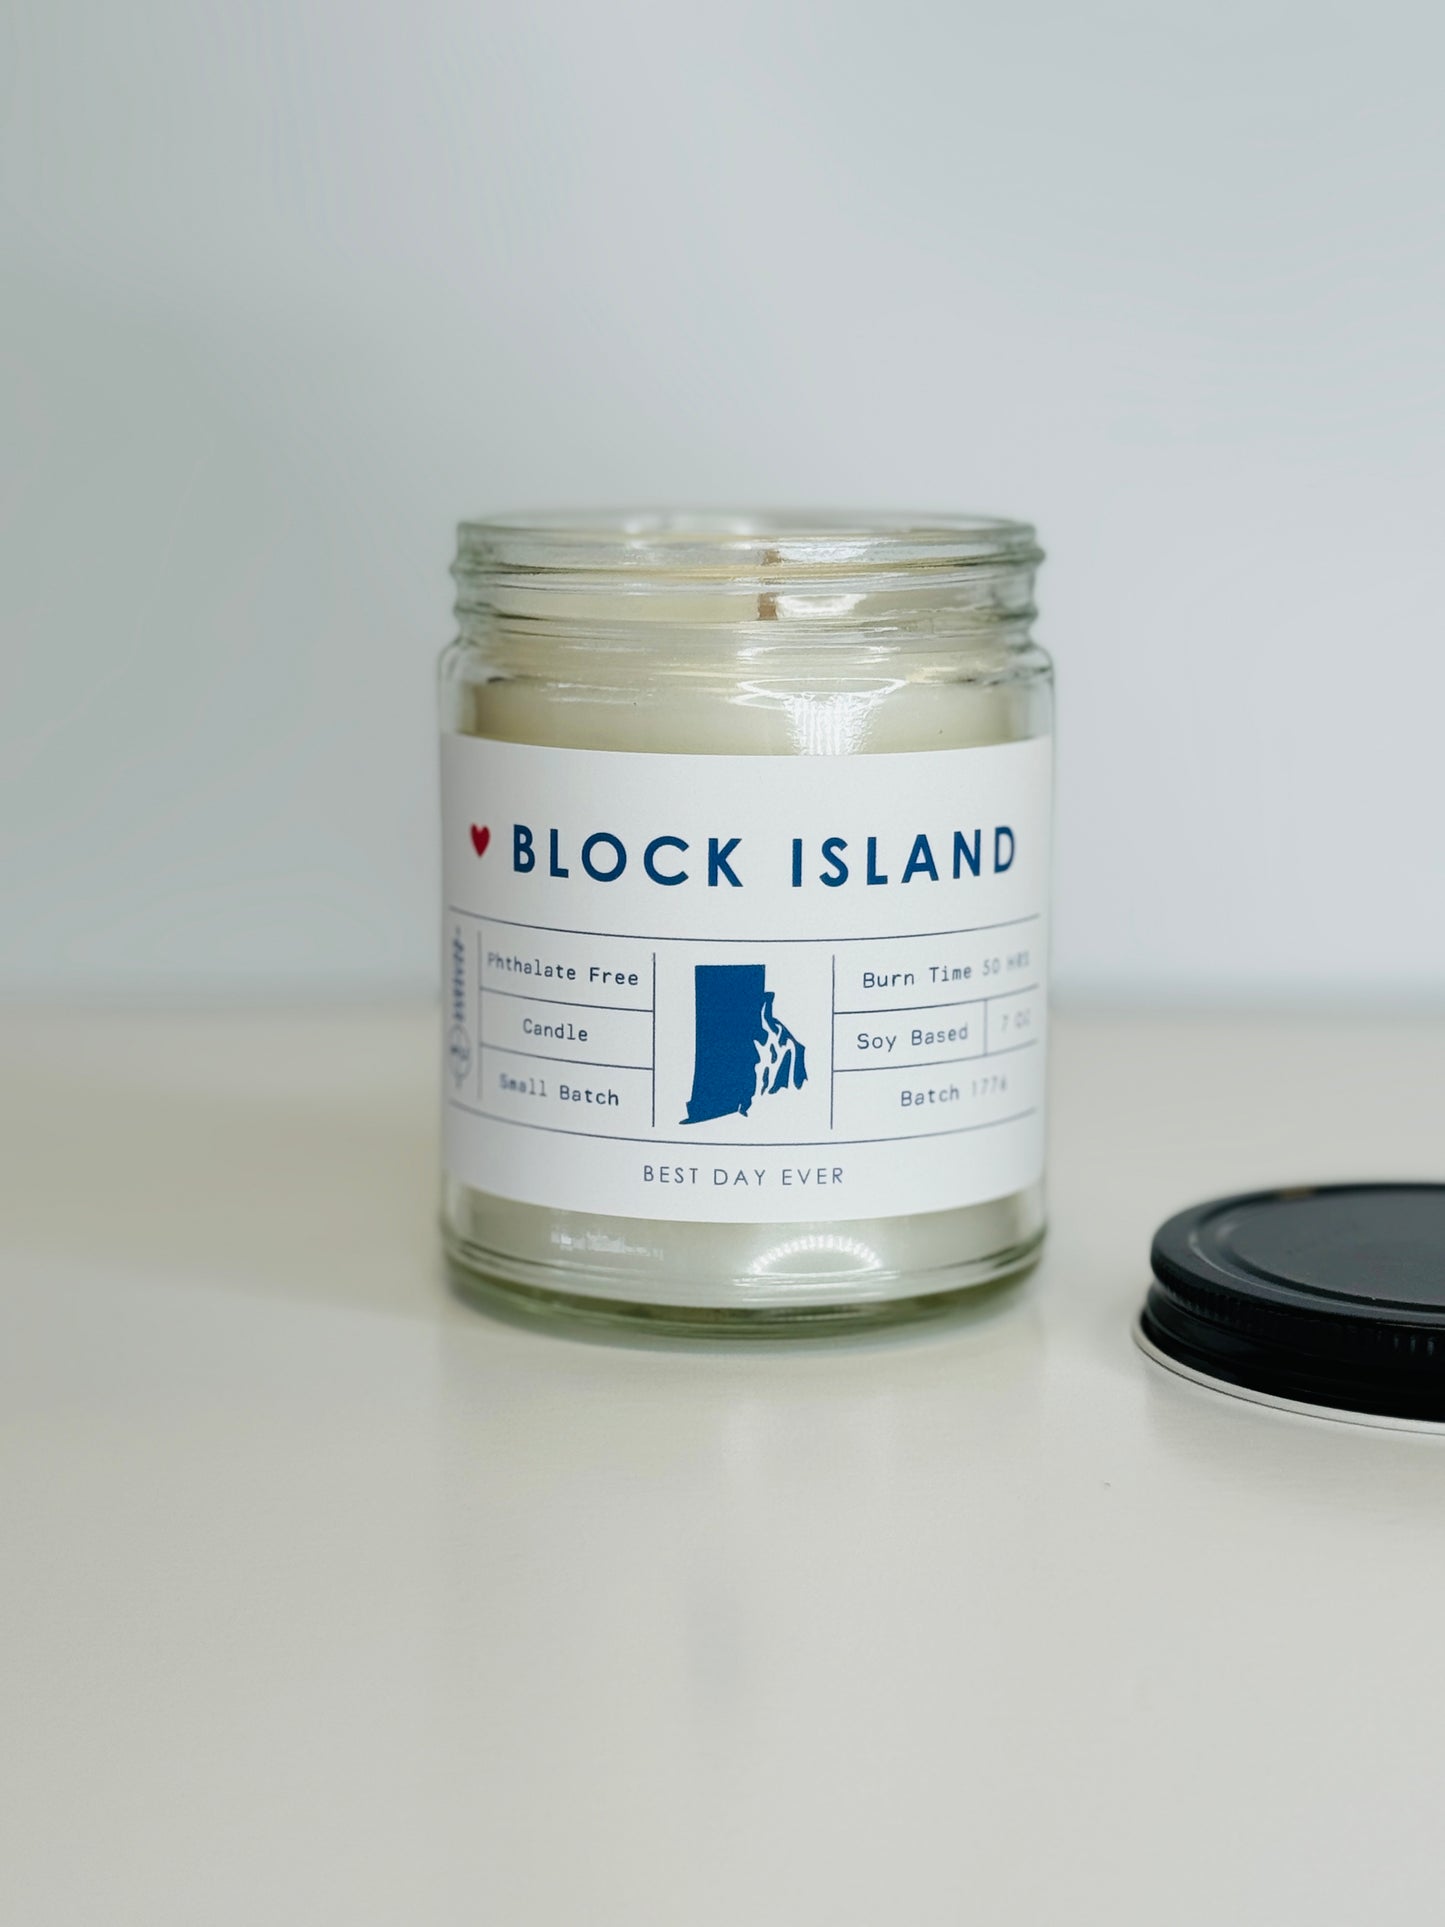 Block Island, Rhode Island Candle